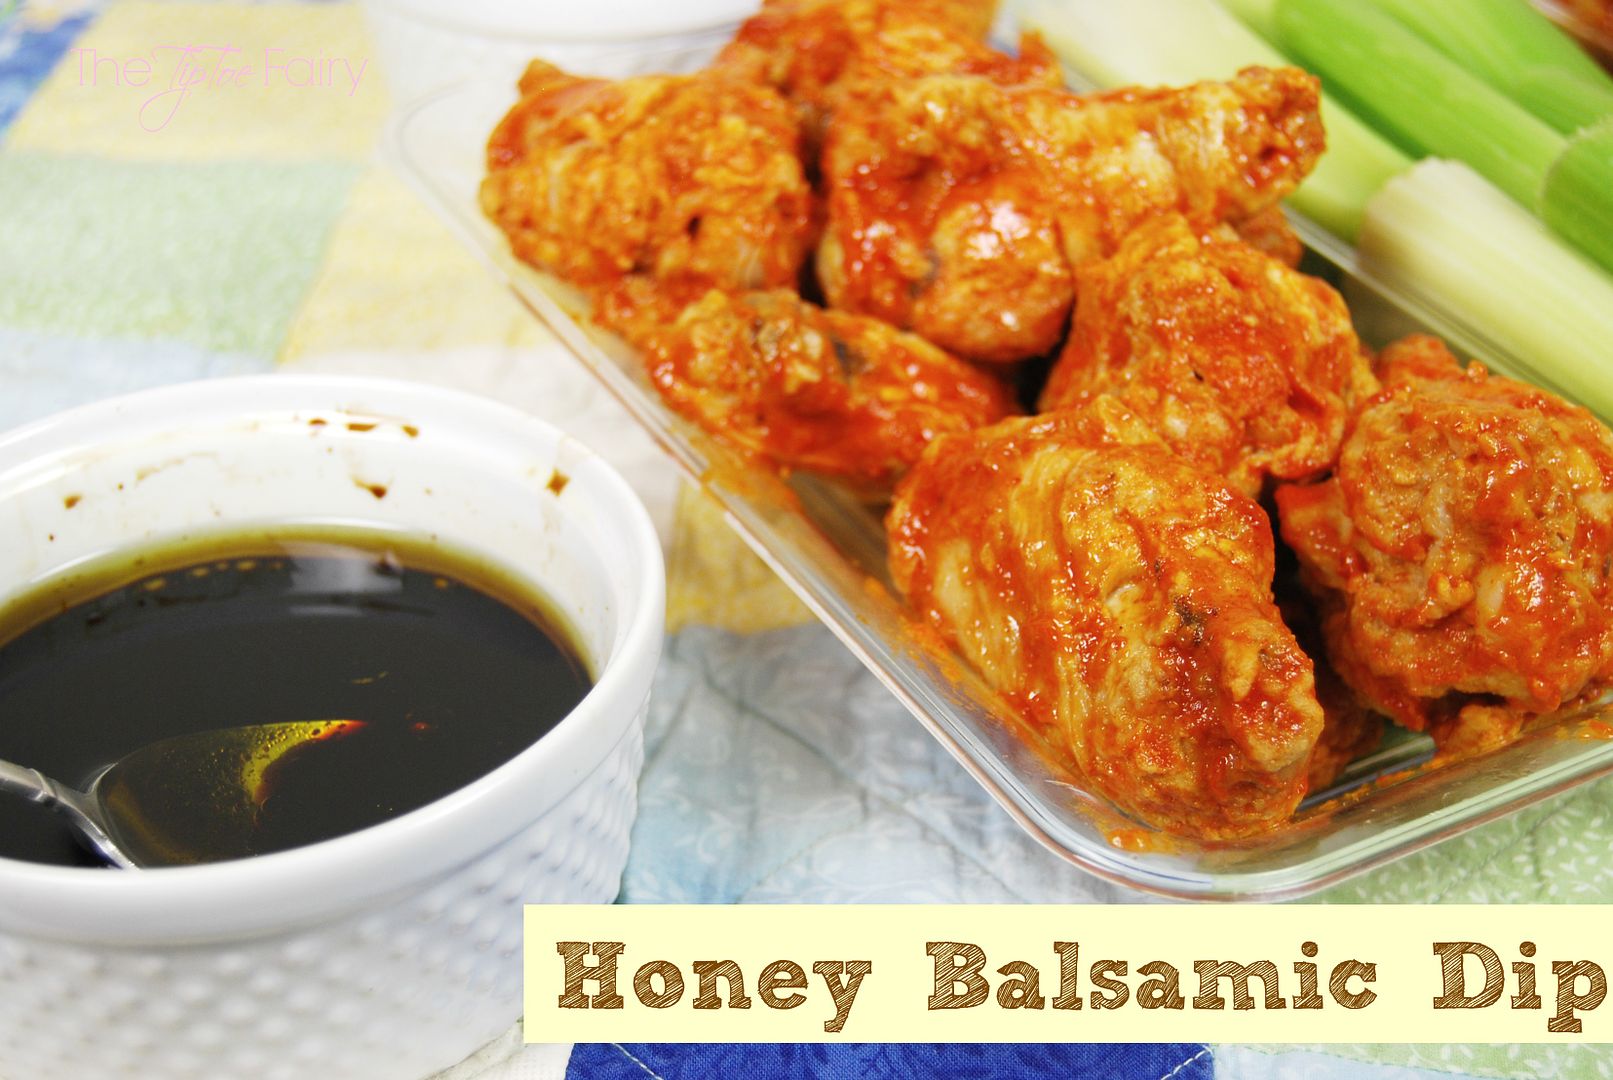 Honey Balsamic Dip for Wings | #wingsandwipes #pmedia #ad #diprecipes #honey #balsamic